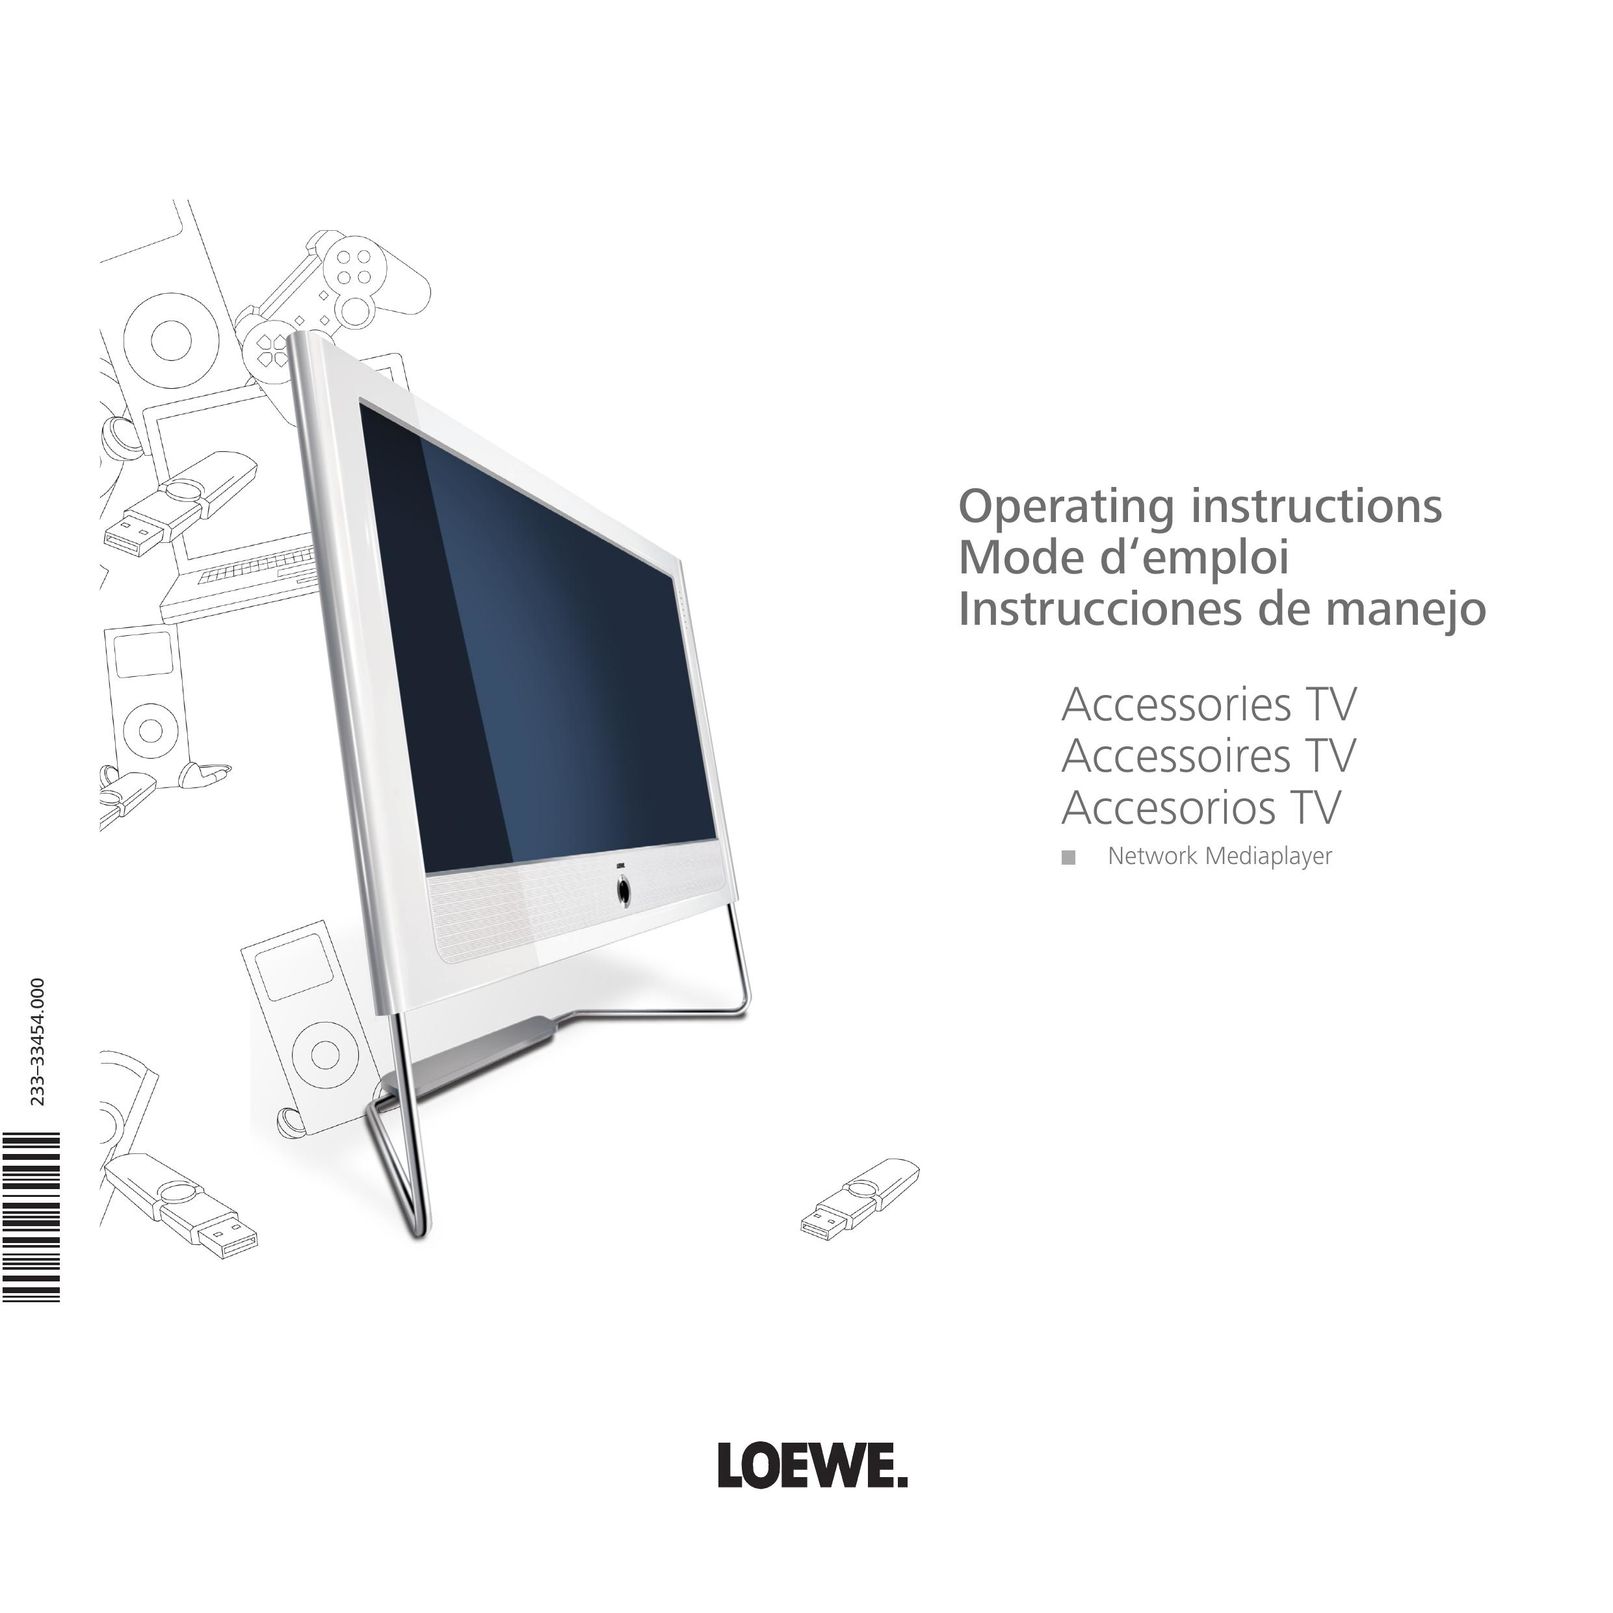 Loewe Accessories TV Car Stereo System User Manual